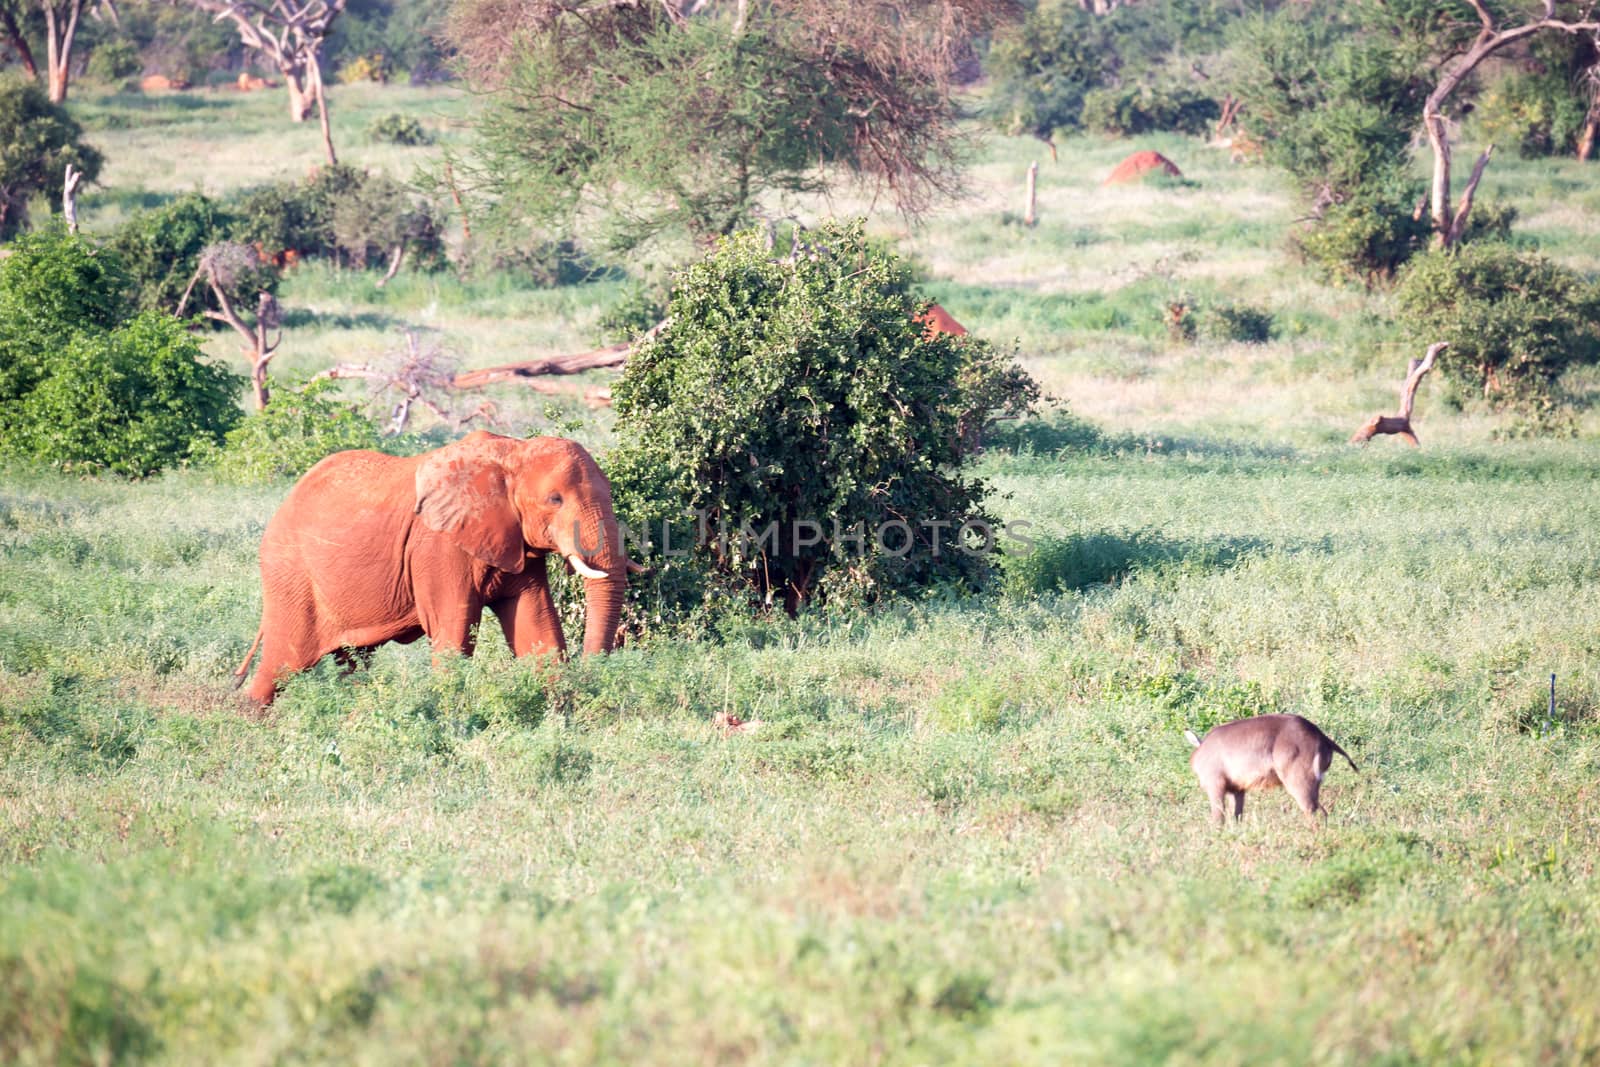 A big red elephant walks through the savannah between many plant by 25ehaag6